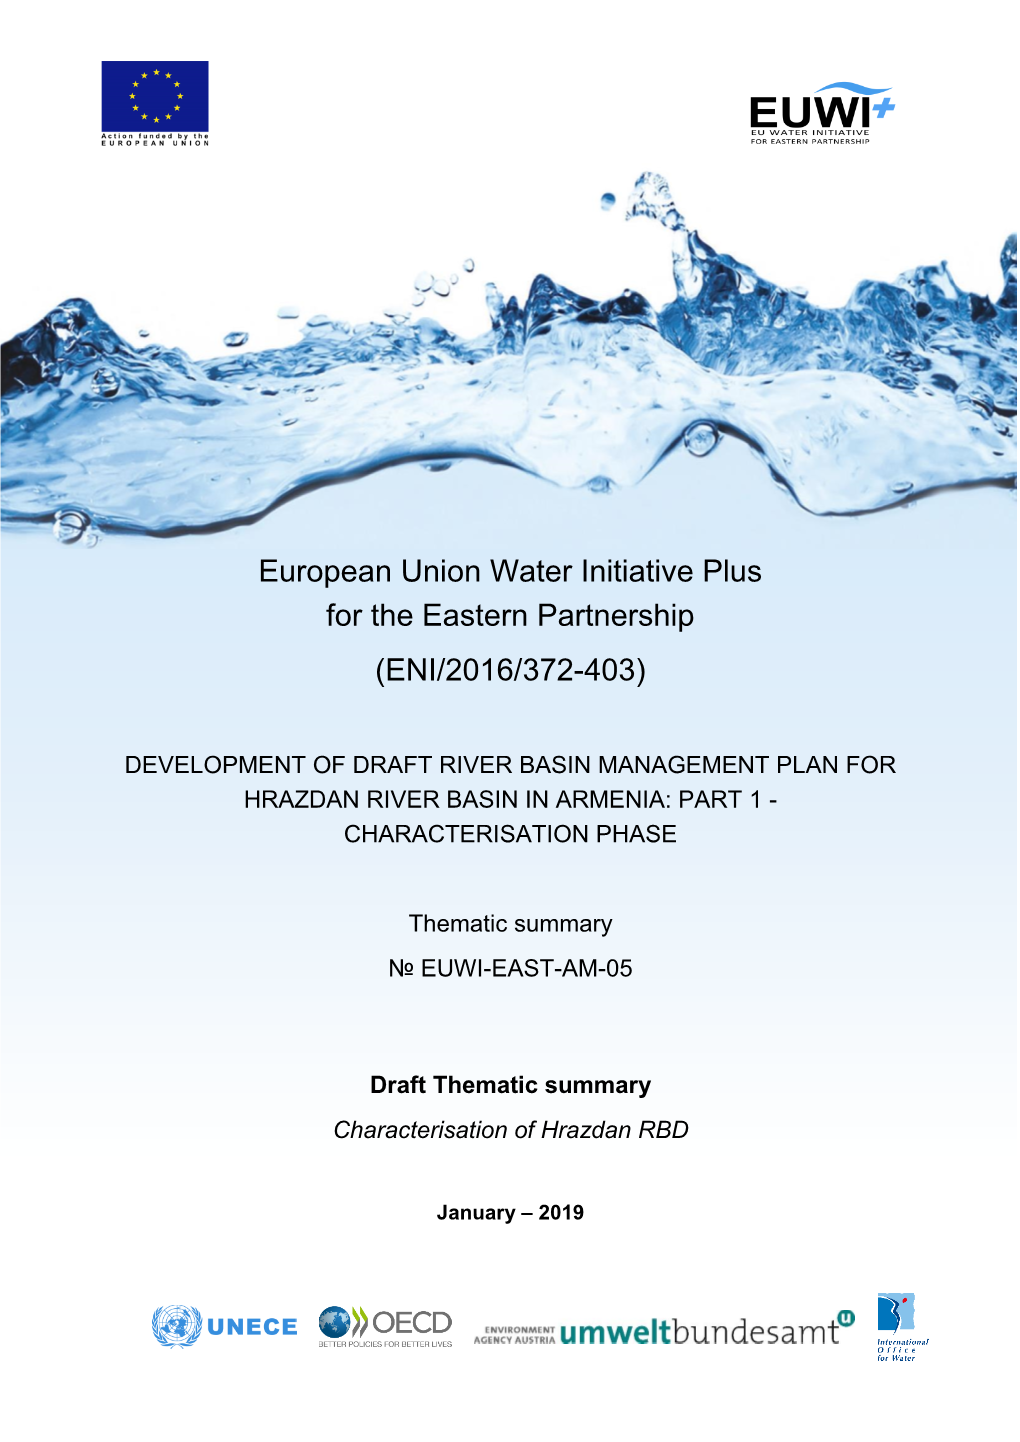 European Union Water Initiative Plus for the Eastern Partnership (ENI/2016/372-403)